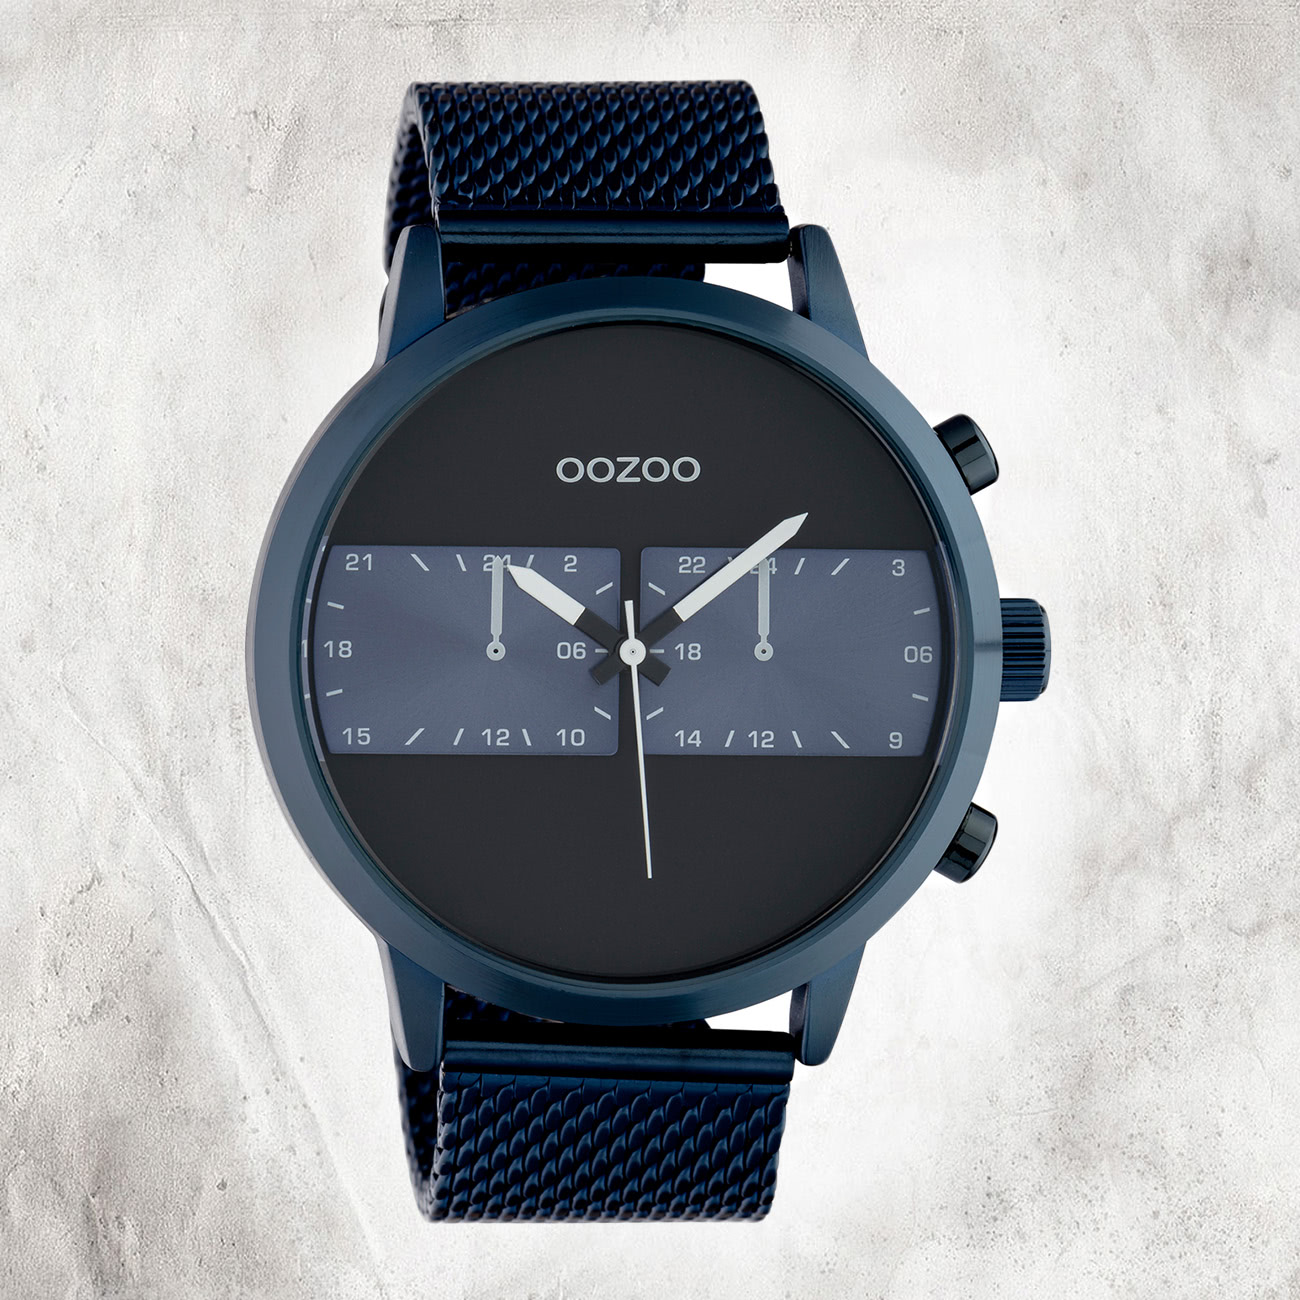 Oozoo Leder Herren Uhr Armband braun | UOC8226 Quarzuhr eBay C8226 Timepieces Analog